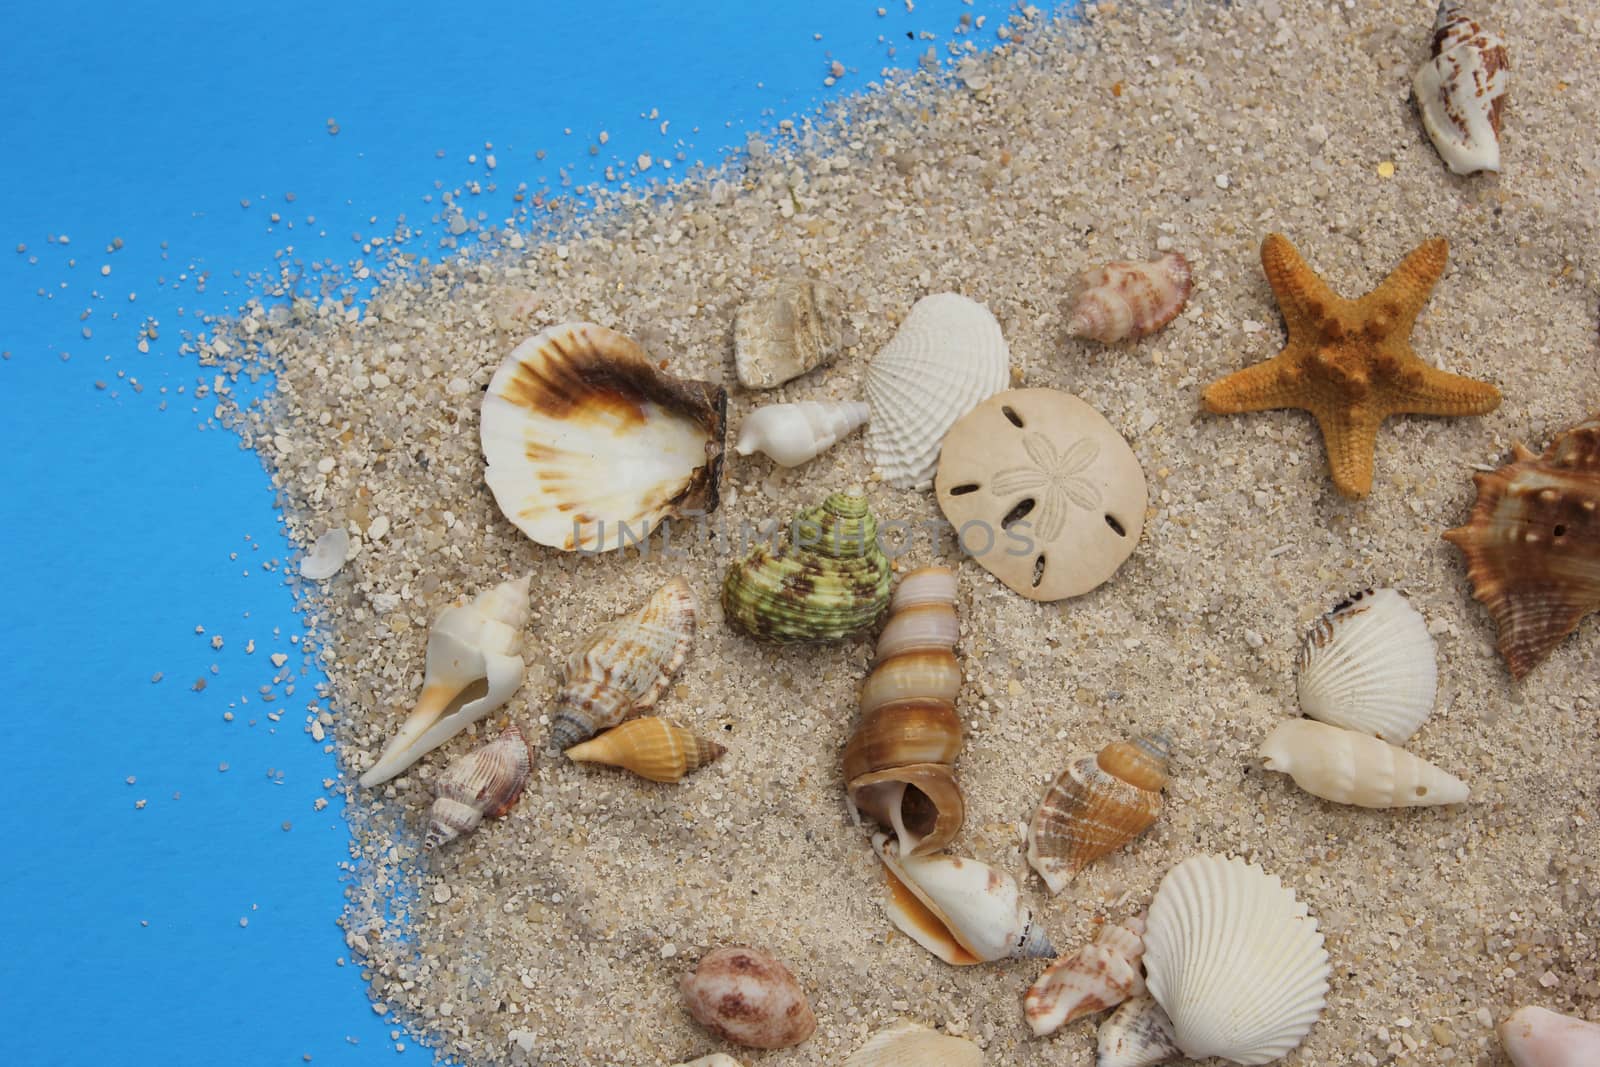 Sea Shells on Beach by Marti157900